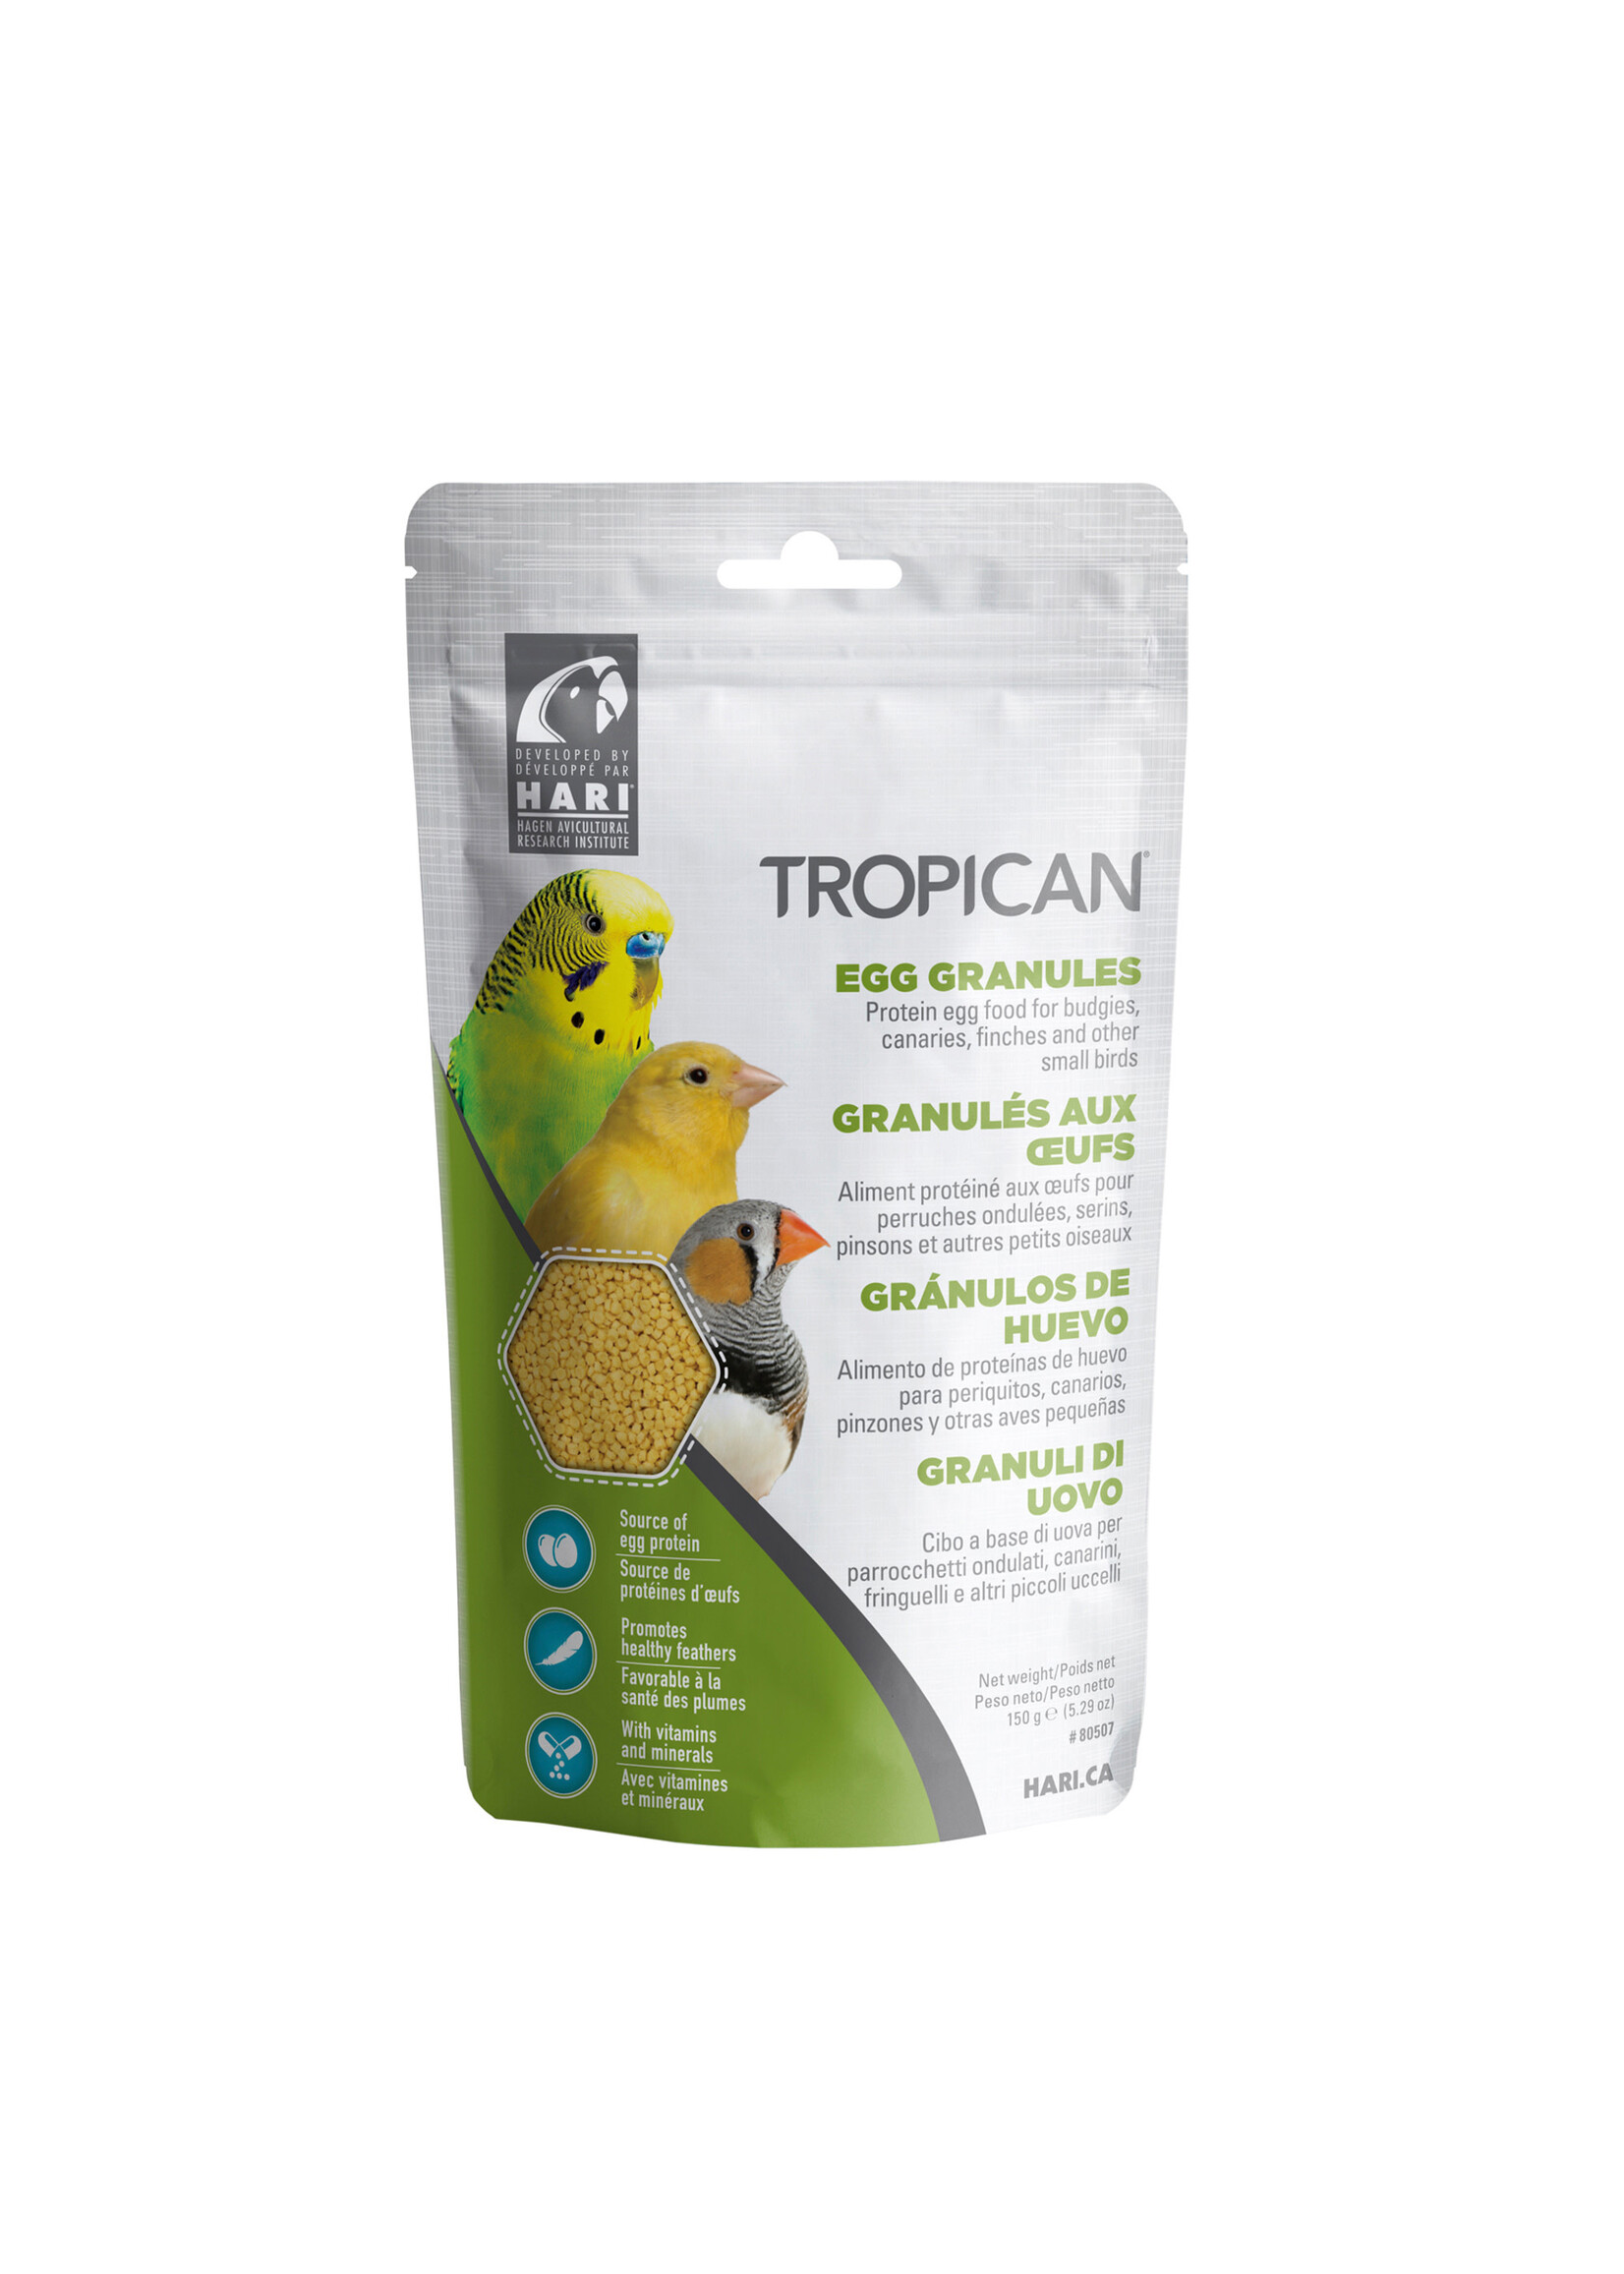 Tropican Tropican Egg Granules for Small Birds, 5.29 oz